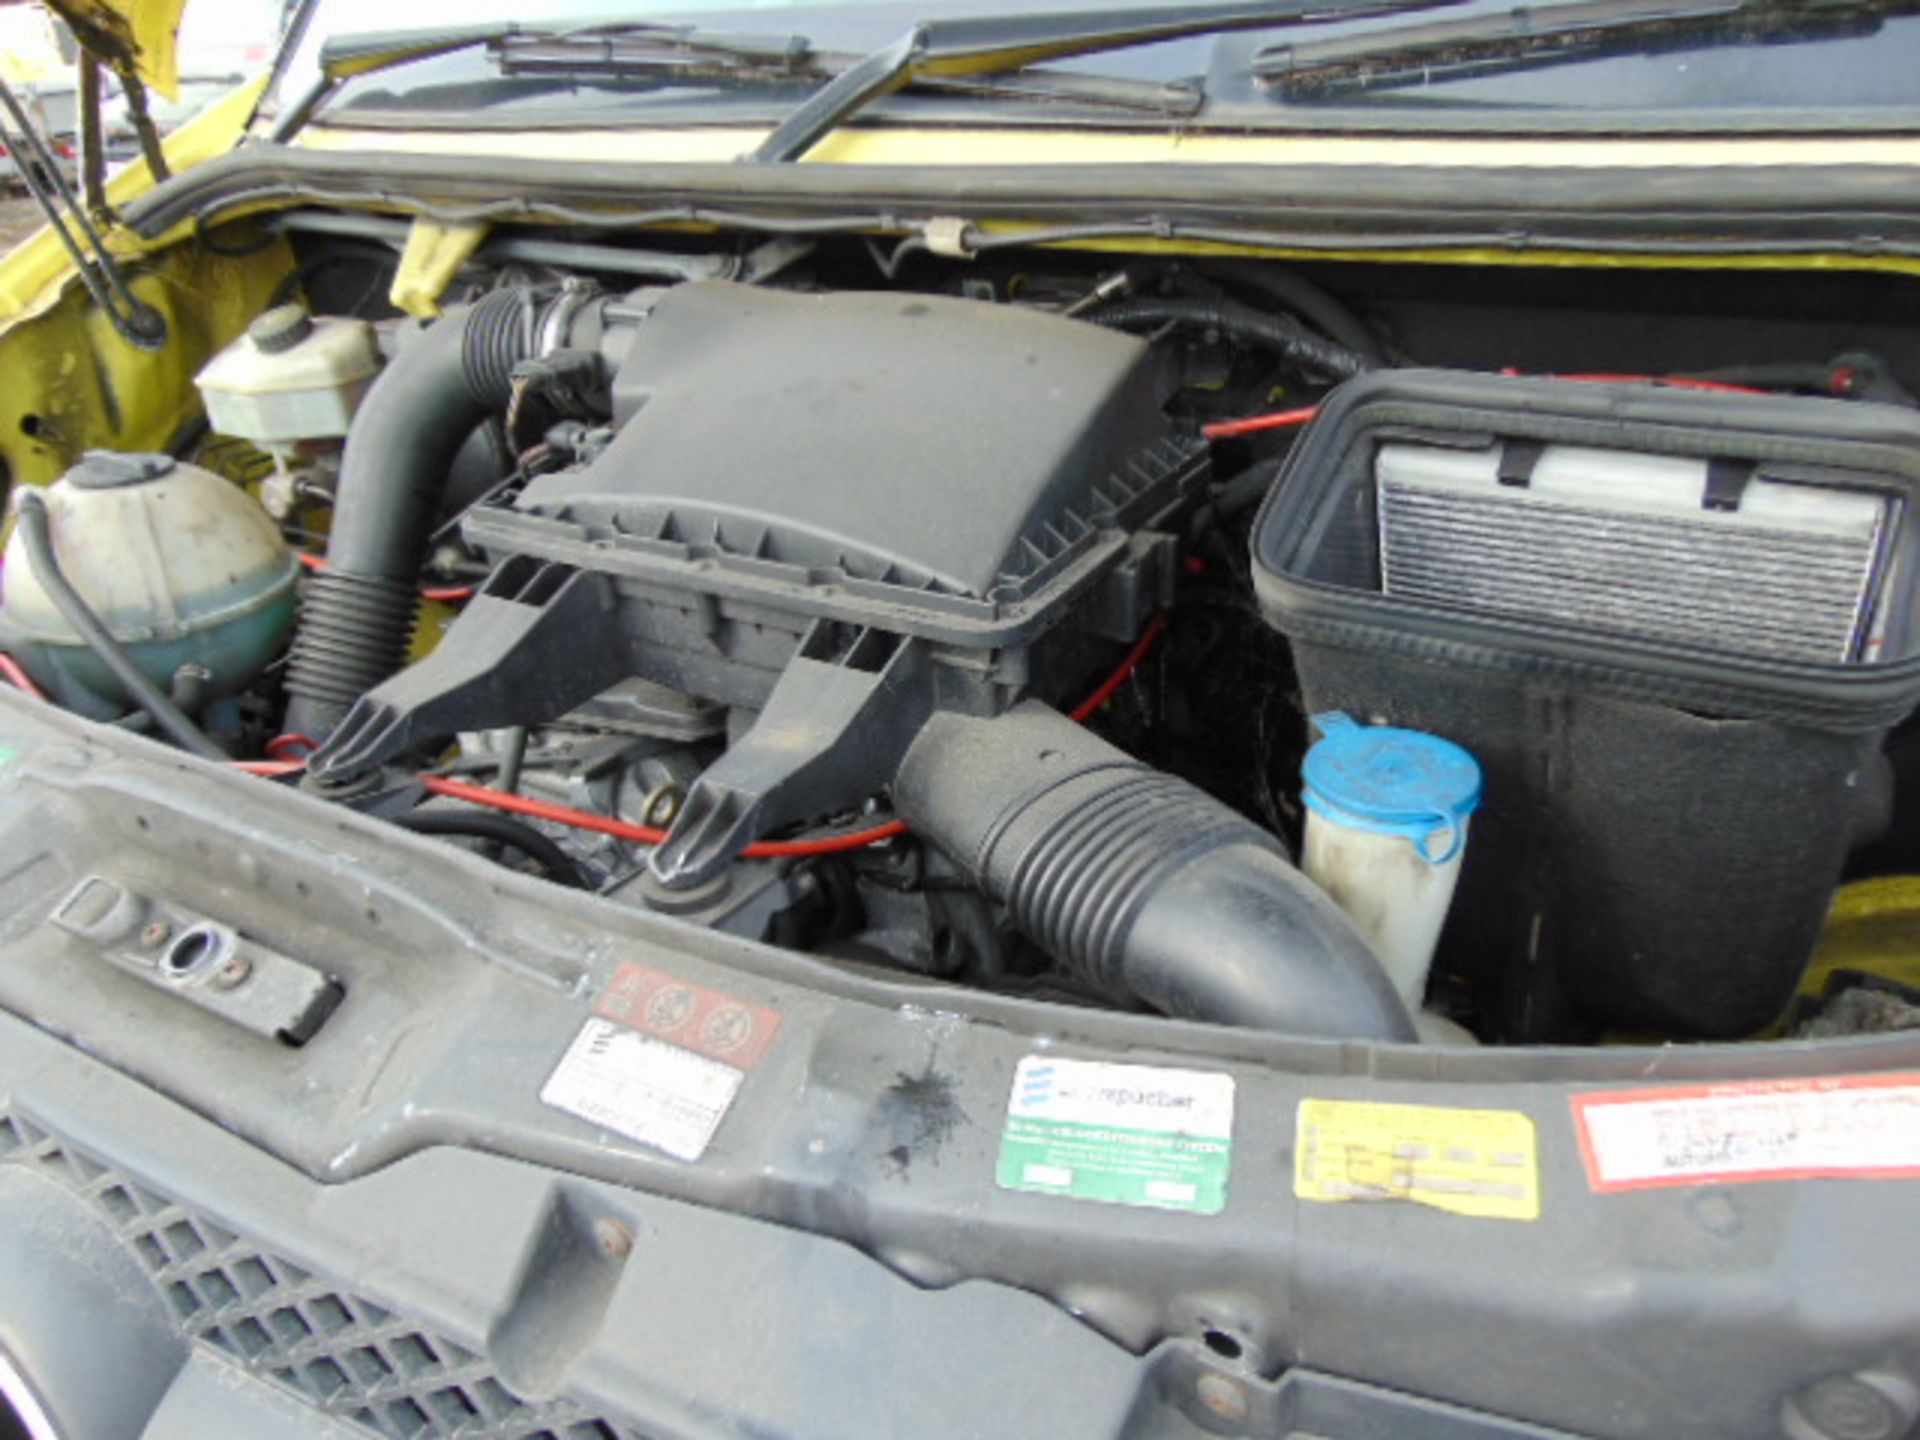 Mercedes Sprinter 515 CDI Turbo diesel ambulance - Image 18 of 19